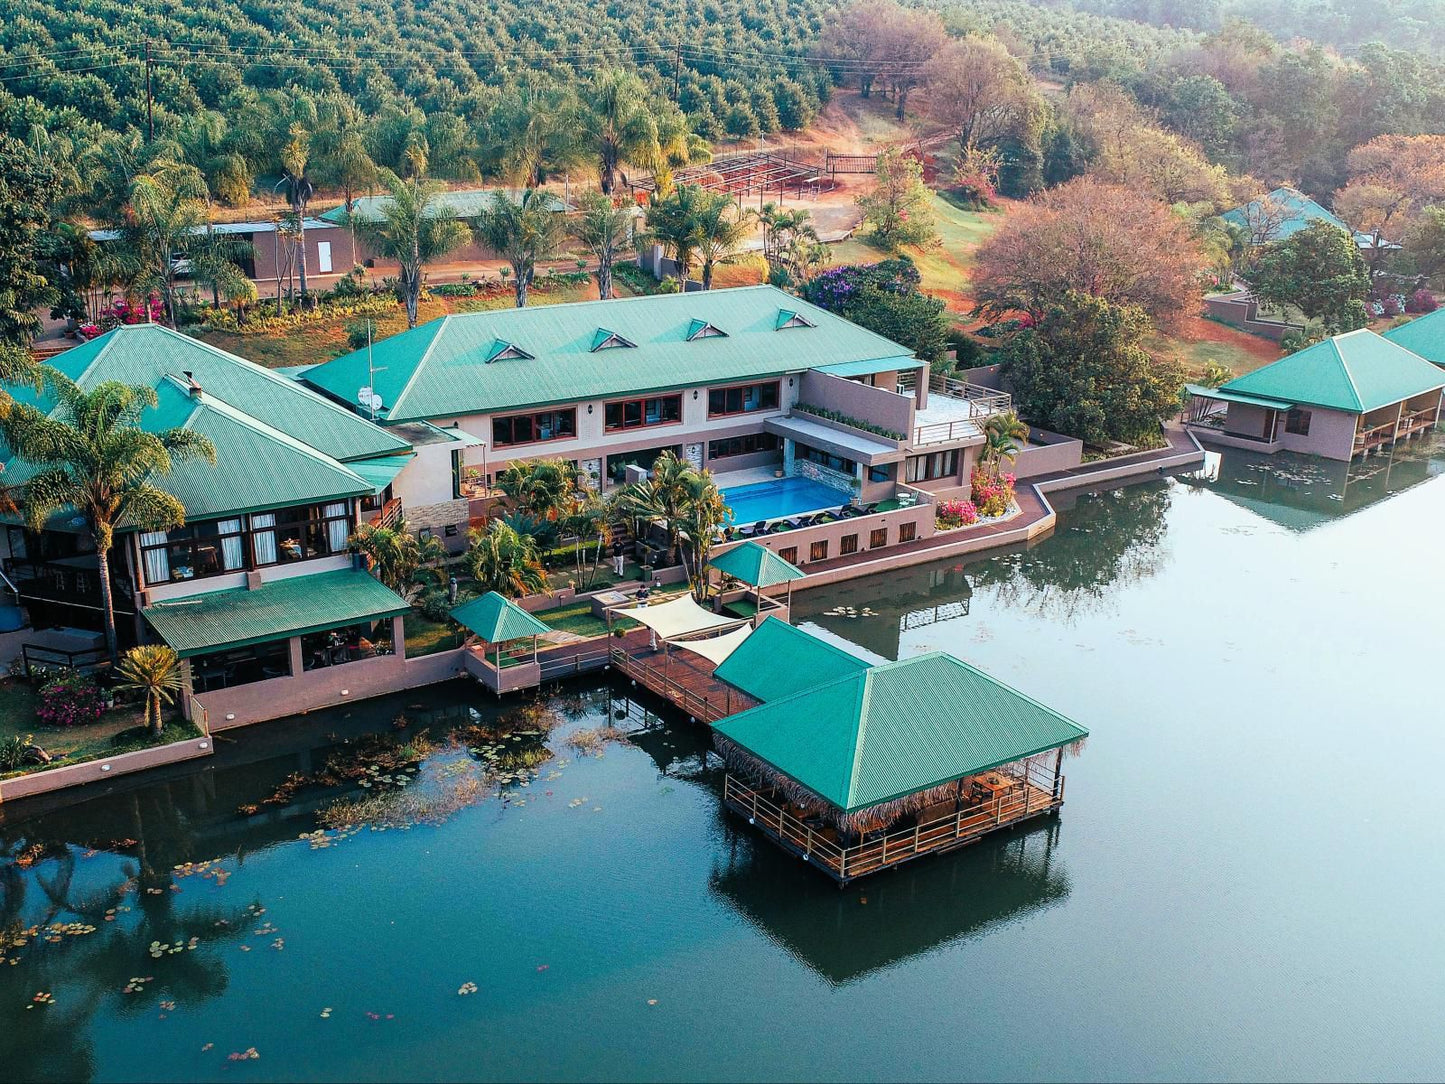 Bambuu Lakeside Lodge Hazyview Mpumalanga South Africa House, Building, Architecture, Island, Nature, Swimming Pool